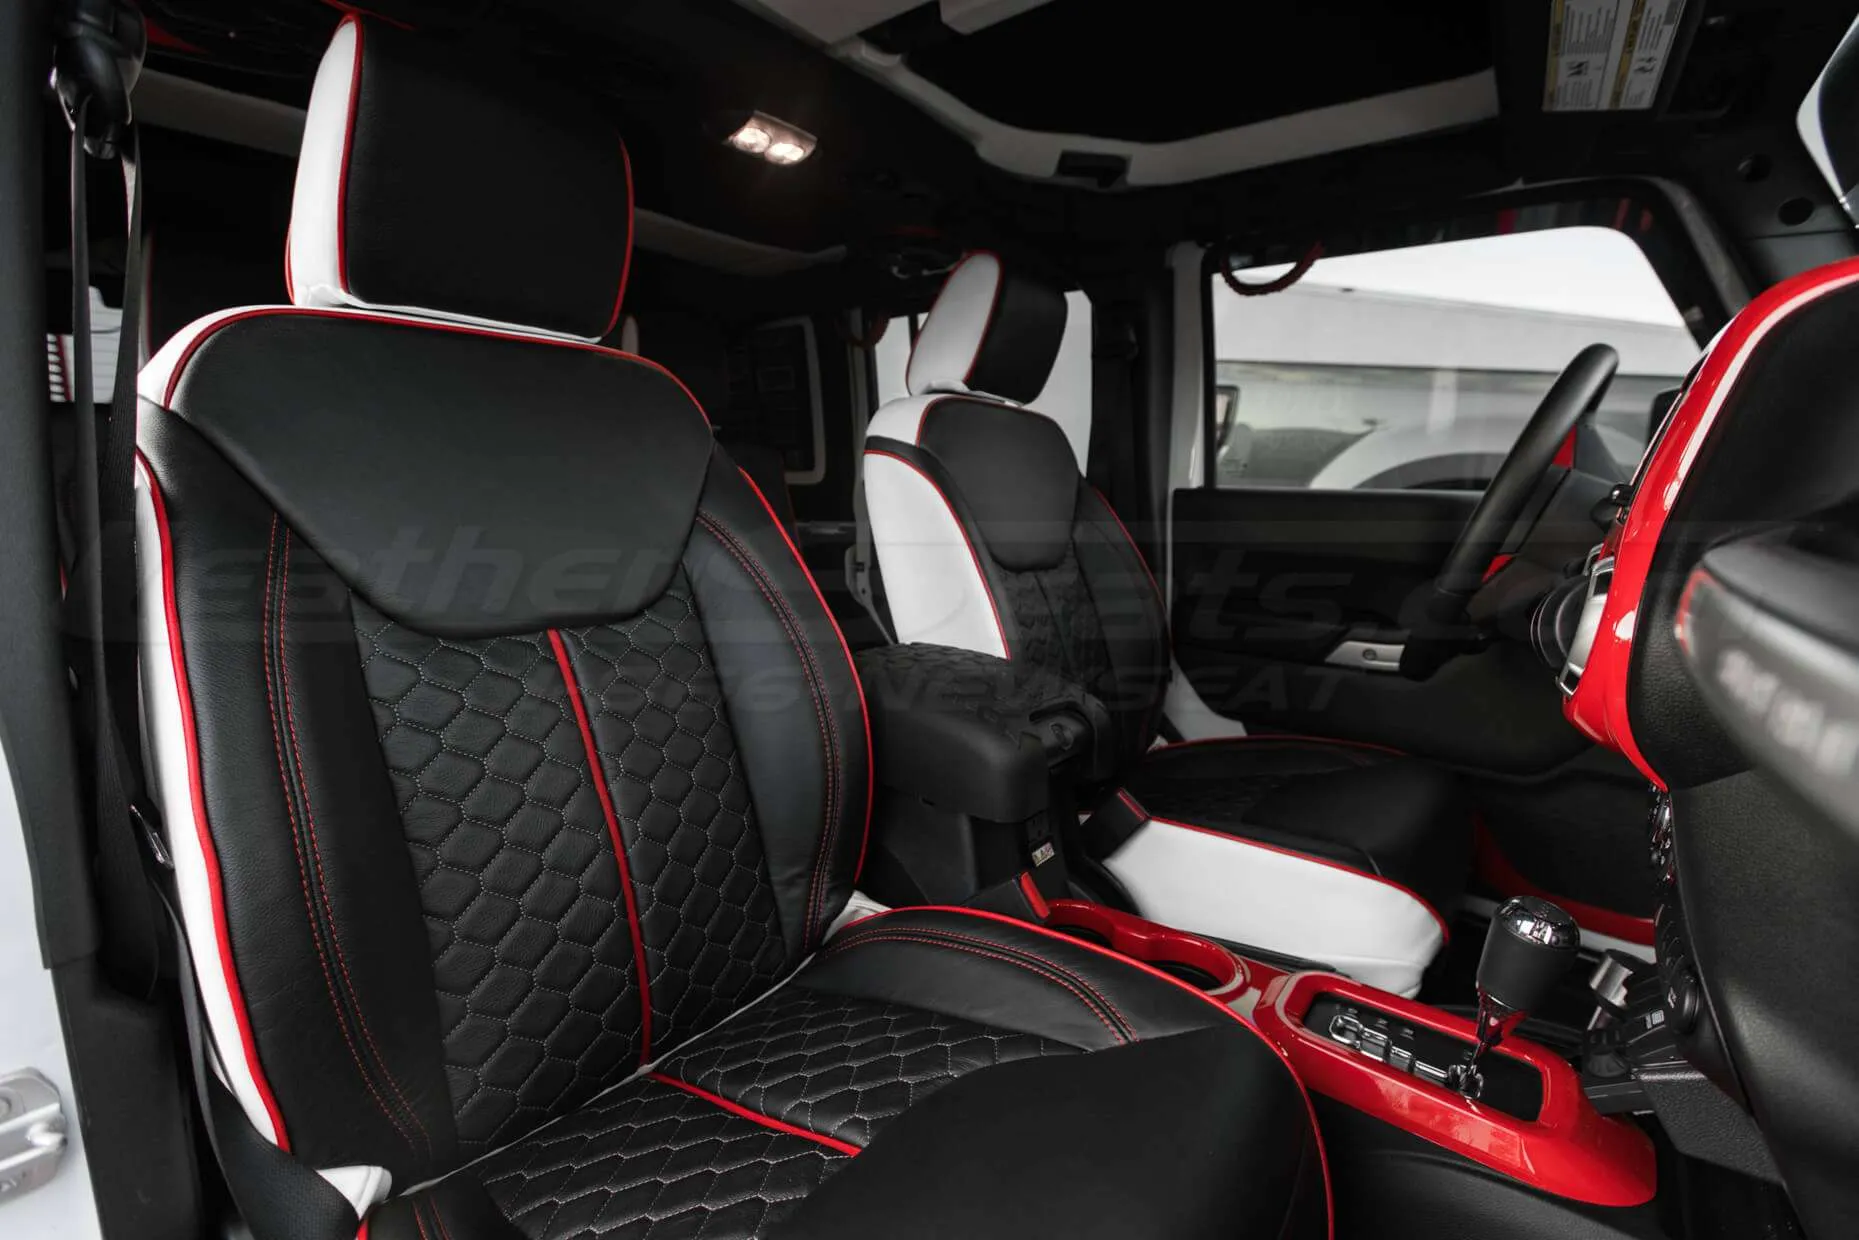 2013-2018 Jeep Wrangler Reticulated Hex installed Upholstery Kit - White/Black/Bright Red - Passenger seat backrest and headrest